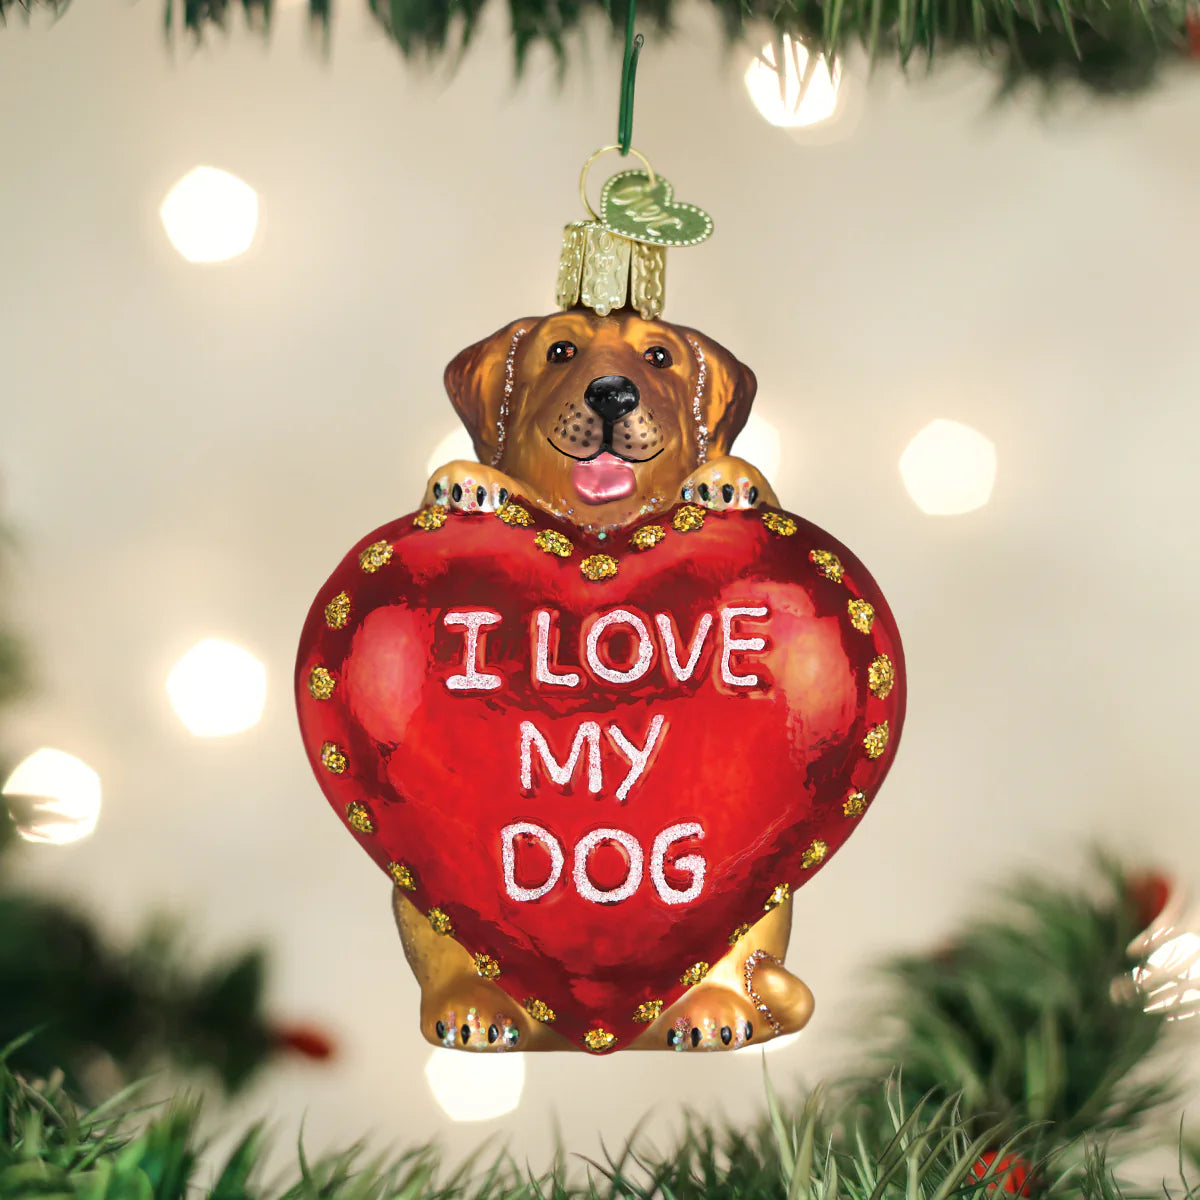 Old World Christmas - I Love My Dog Ornament